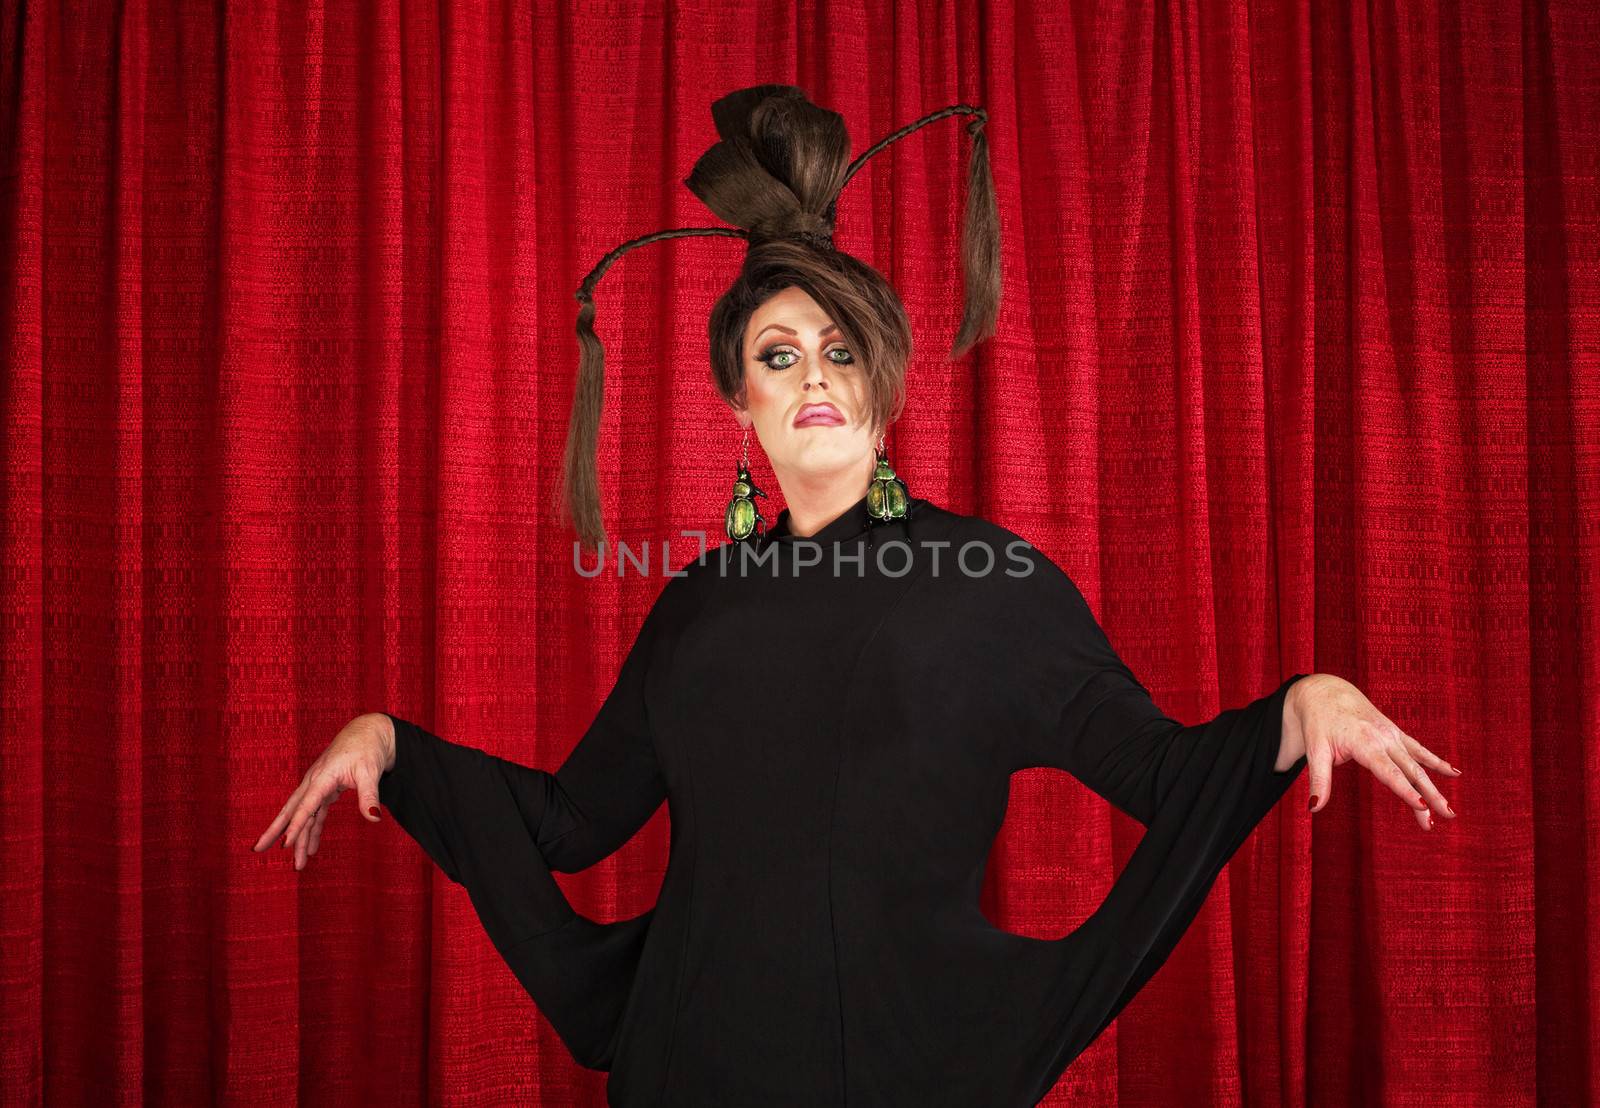 Drag queen in theater wearing unique dress